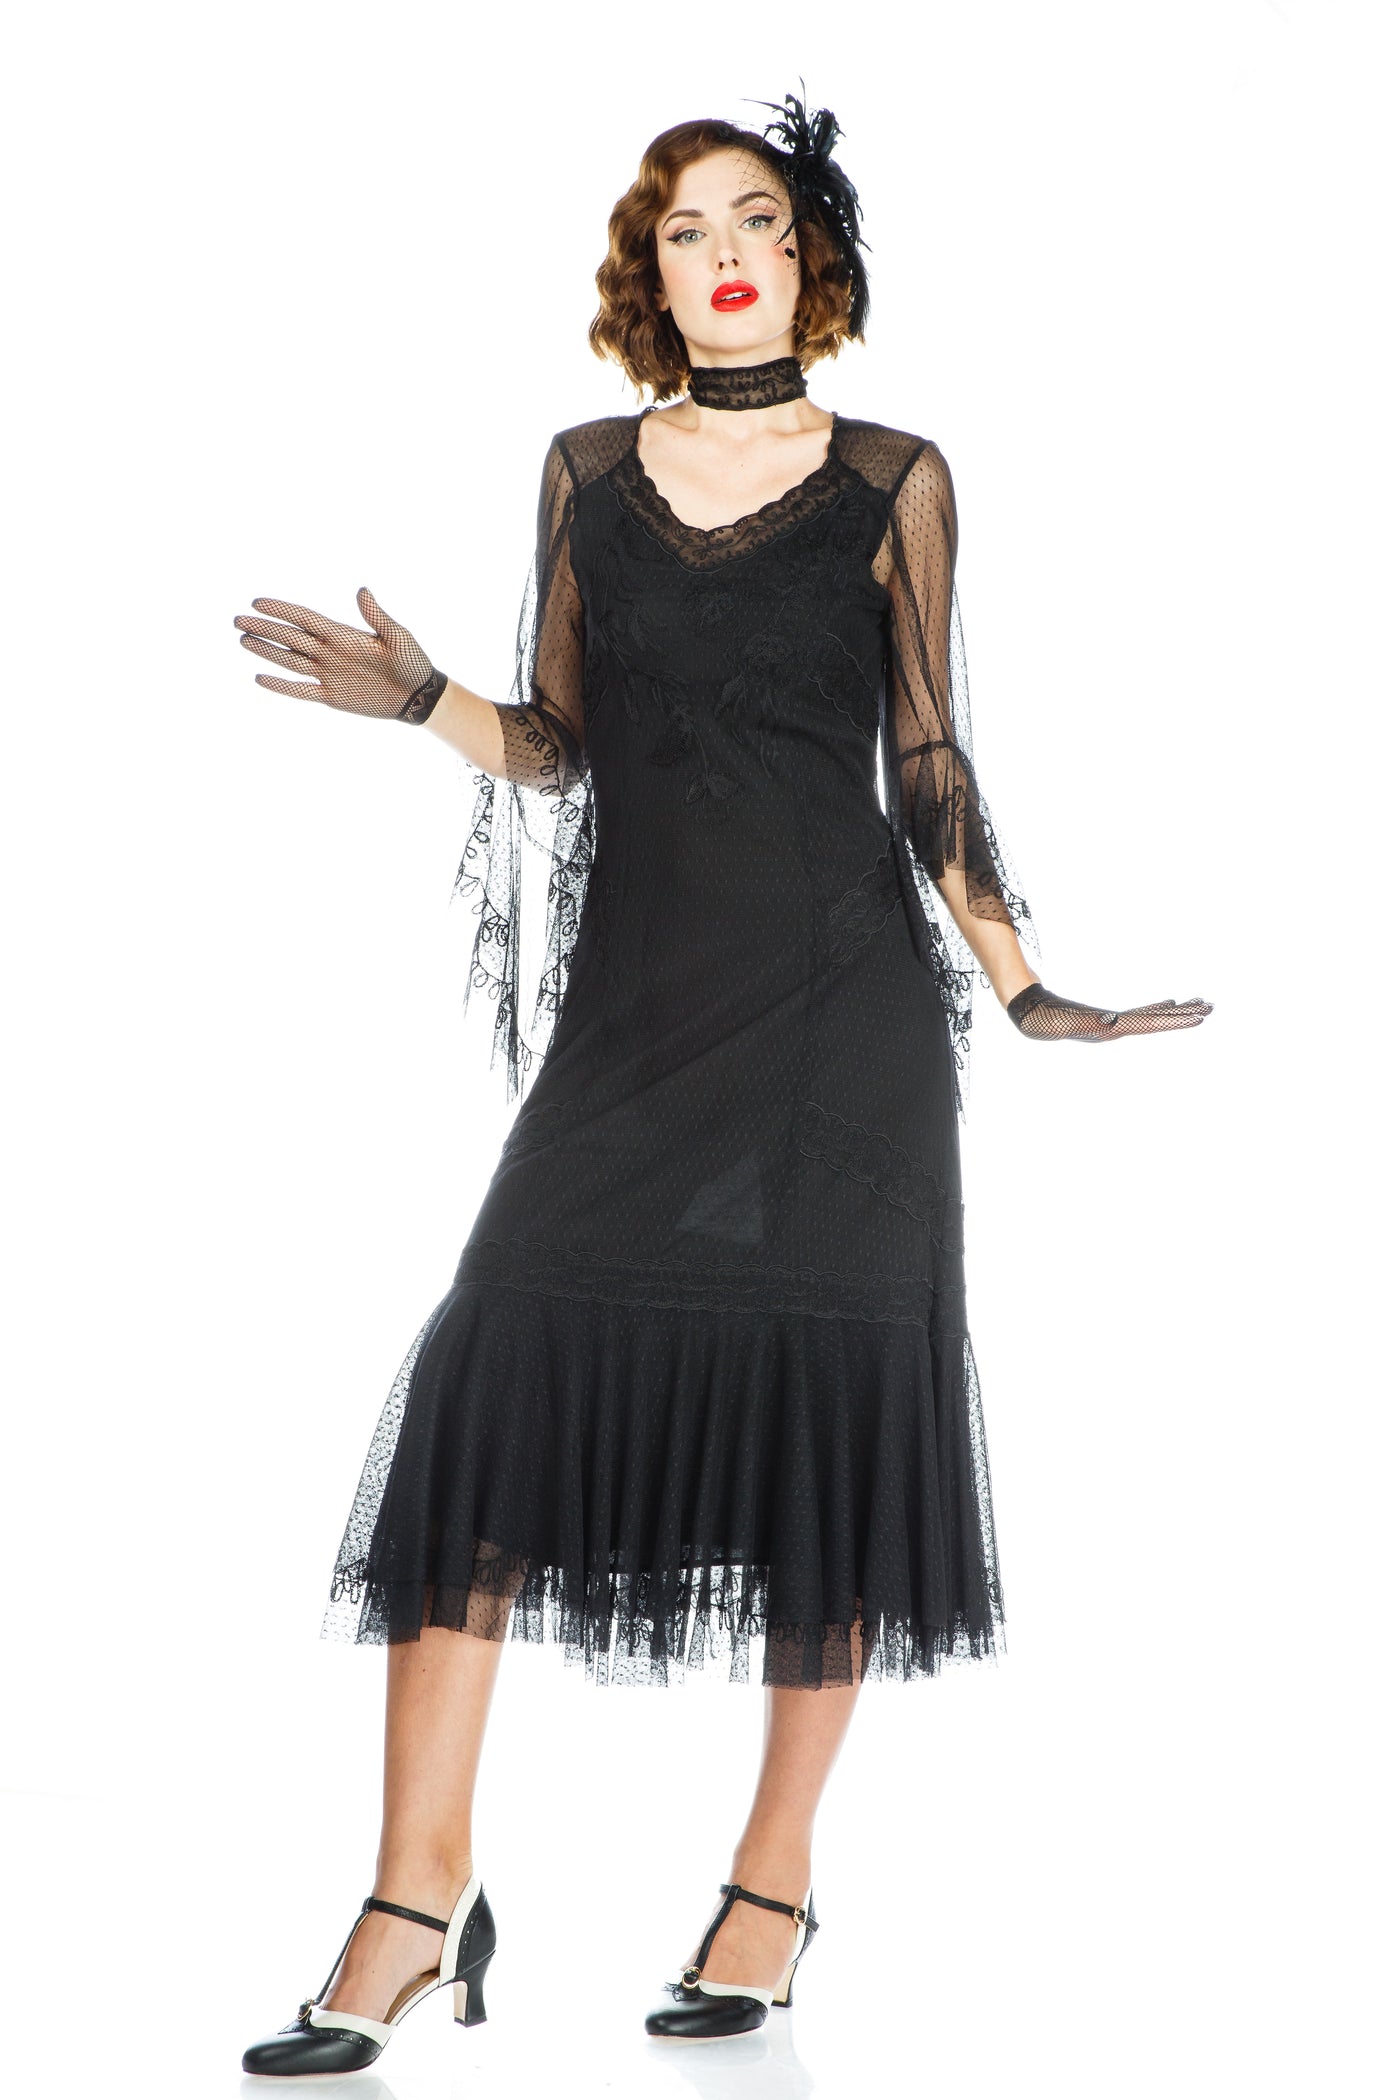 1920s Style Dress 40825 in Black by Nataya